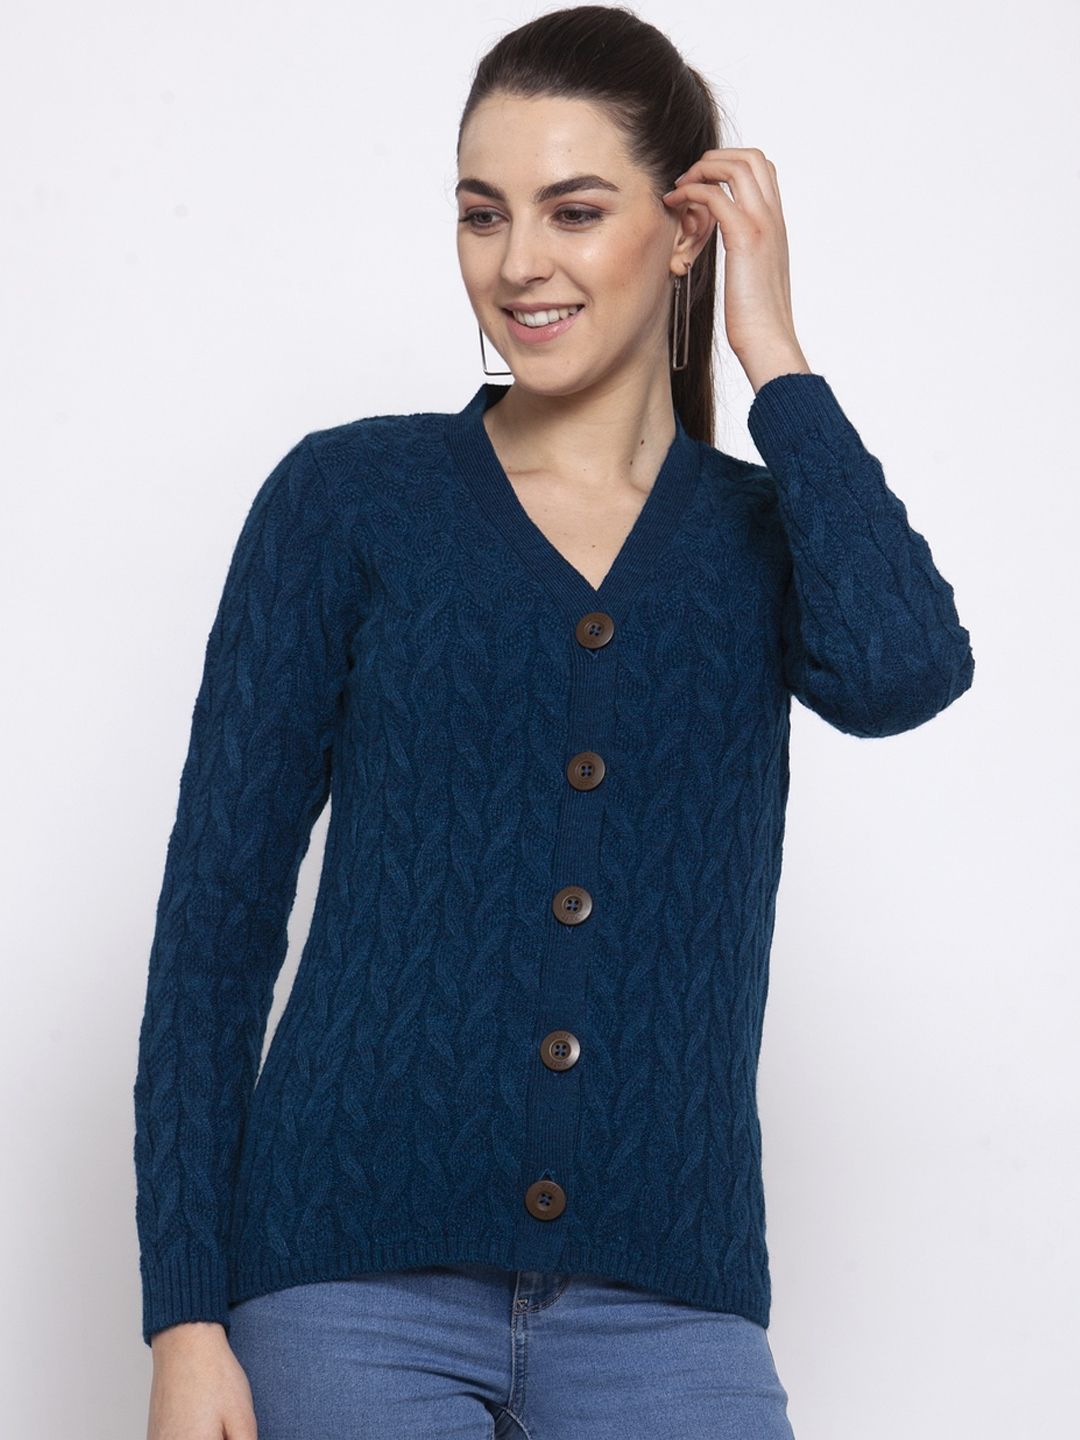 Kalt Women Navy Blue Self Design Cardigan Sweater Price in India